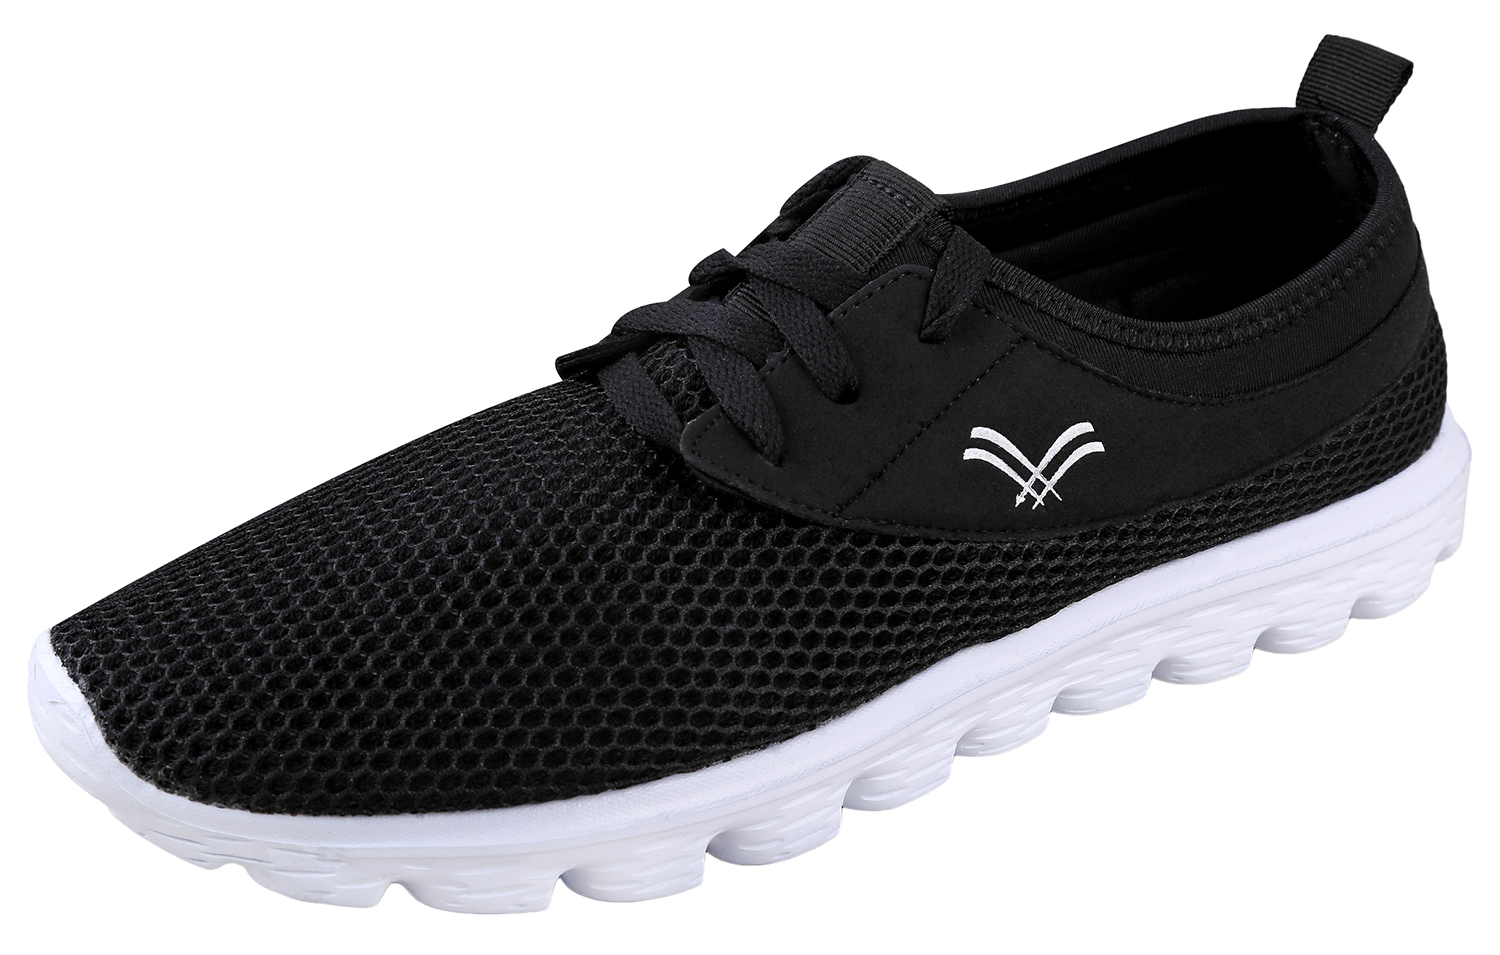 Urban Fox Men's Breeze Lightweight Shoes | Lightweight Shoes for Men | Casual Shoes | Walking Shoes for Men | Black/White 13 M US - image 1 of 7